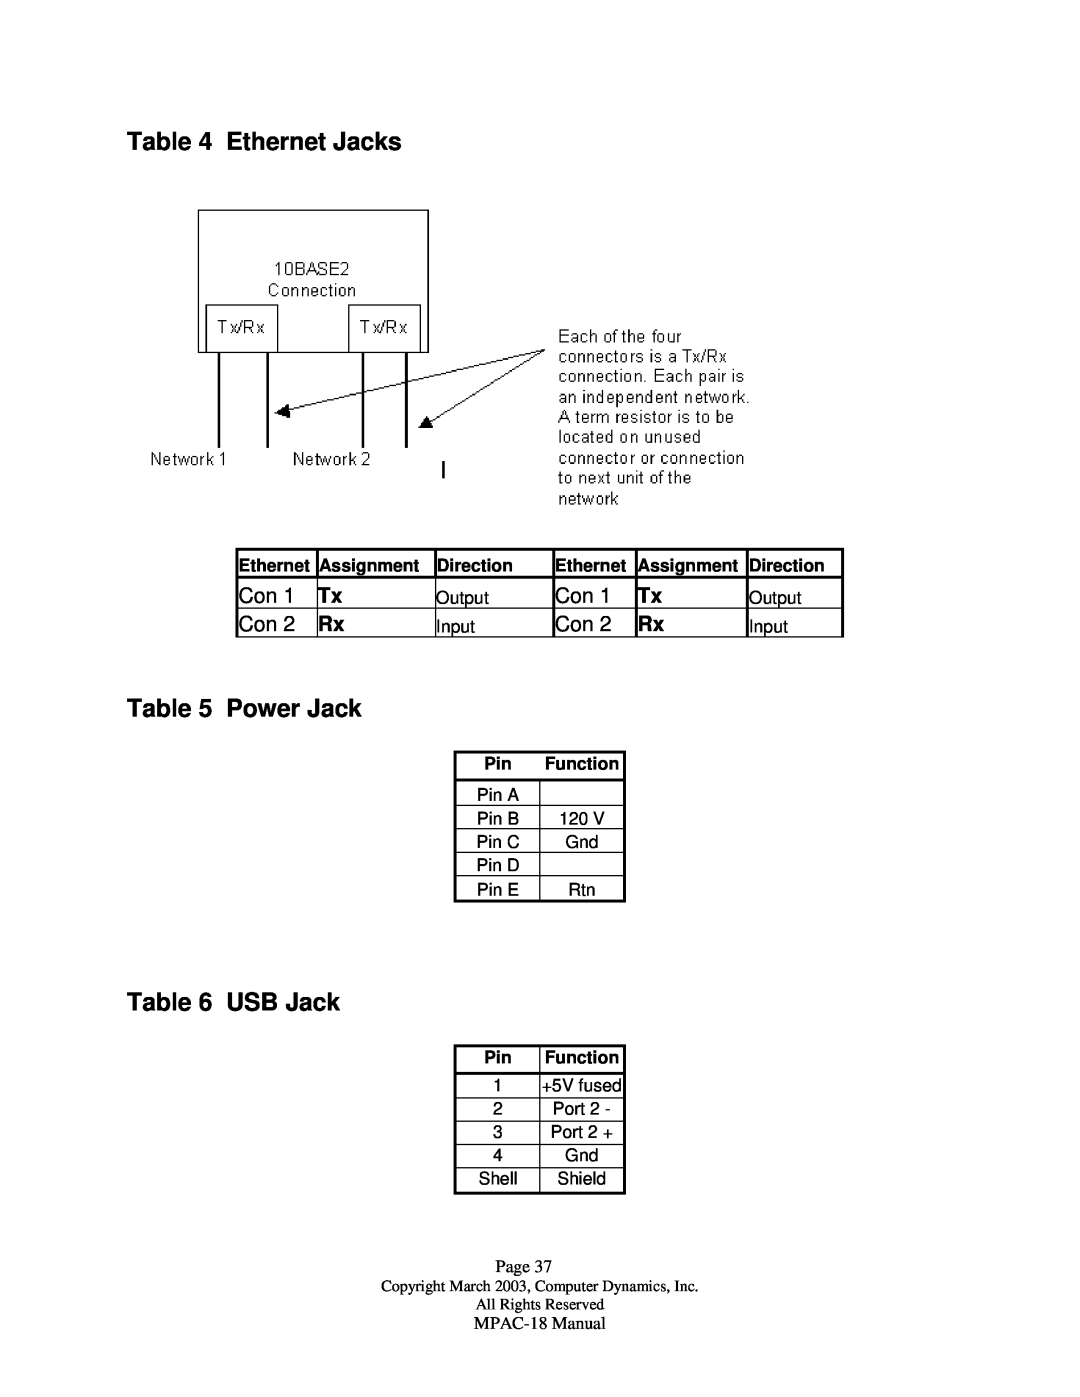 Compaq MPAC-18 manual Ethernet Jacks, Power Jack, USB Jack 